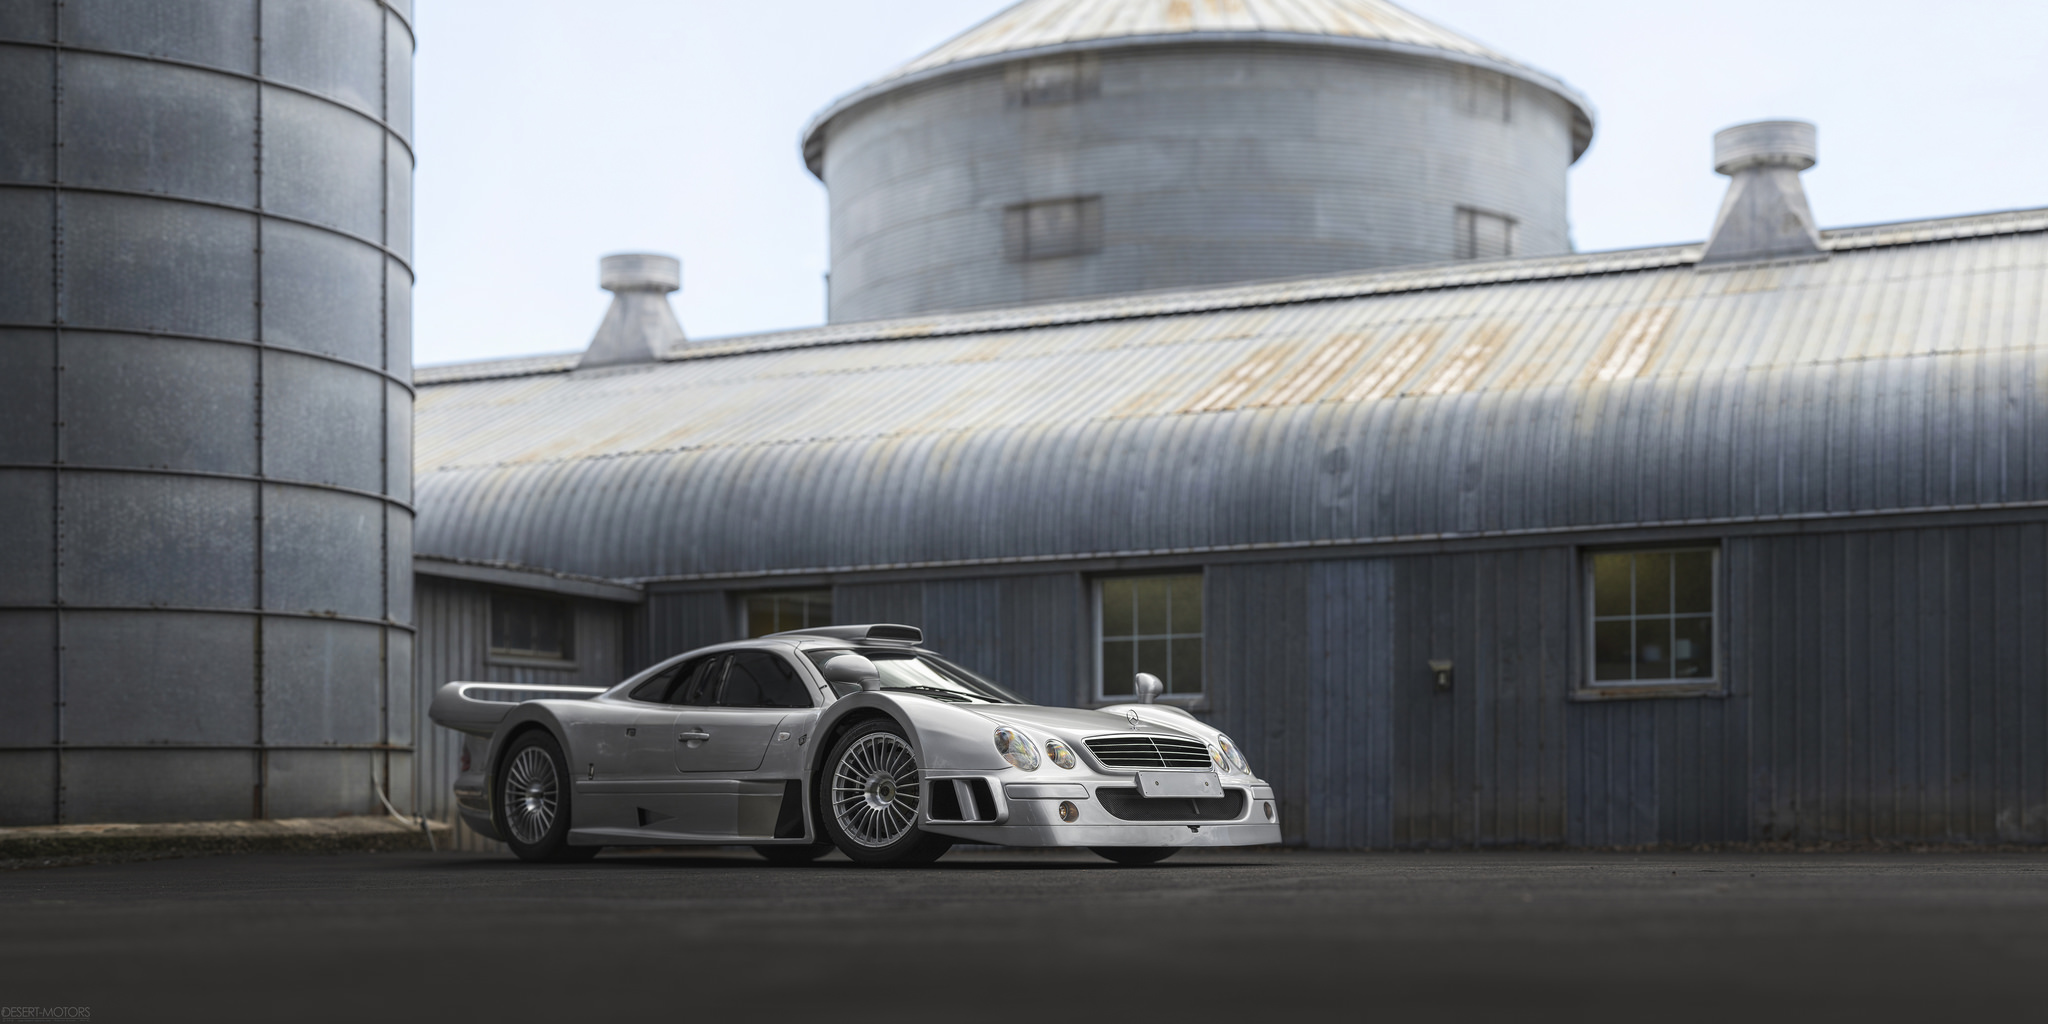 Mercedes Benz CLK GTR Silver Cars Hypercar Race Cars German Cars 2048x1024